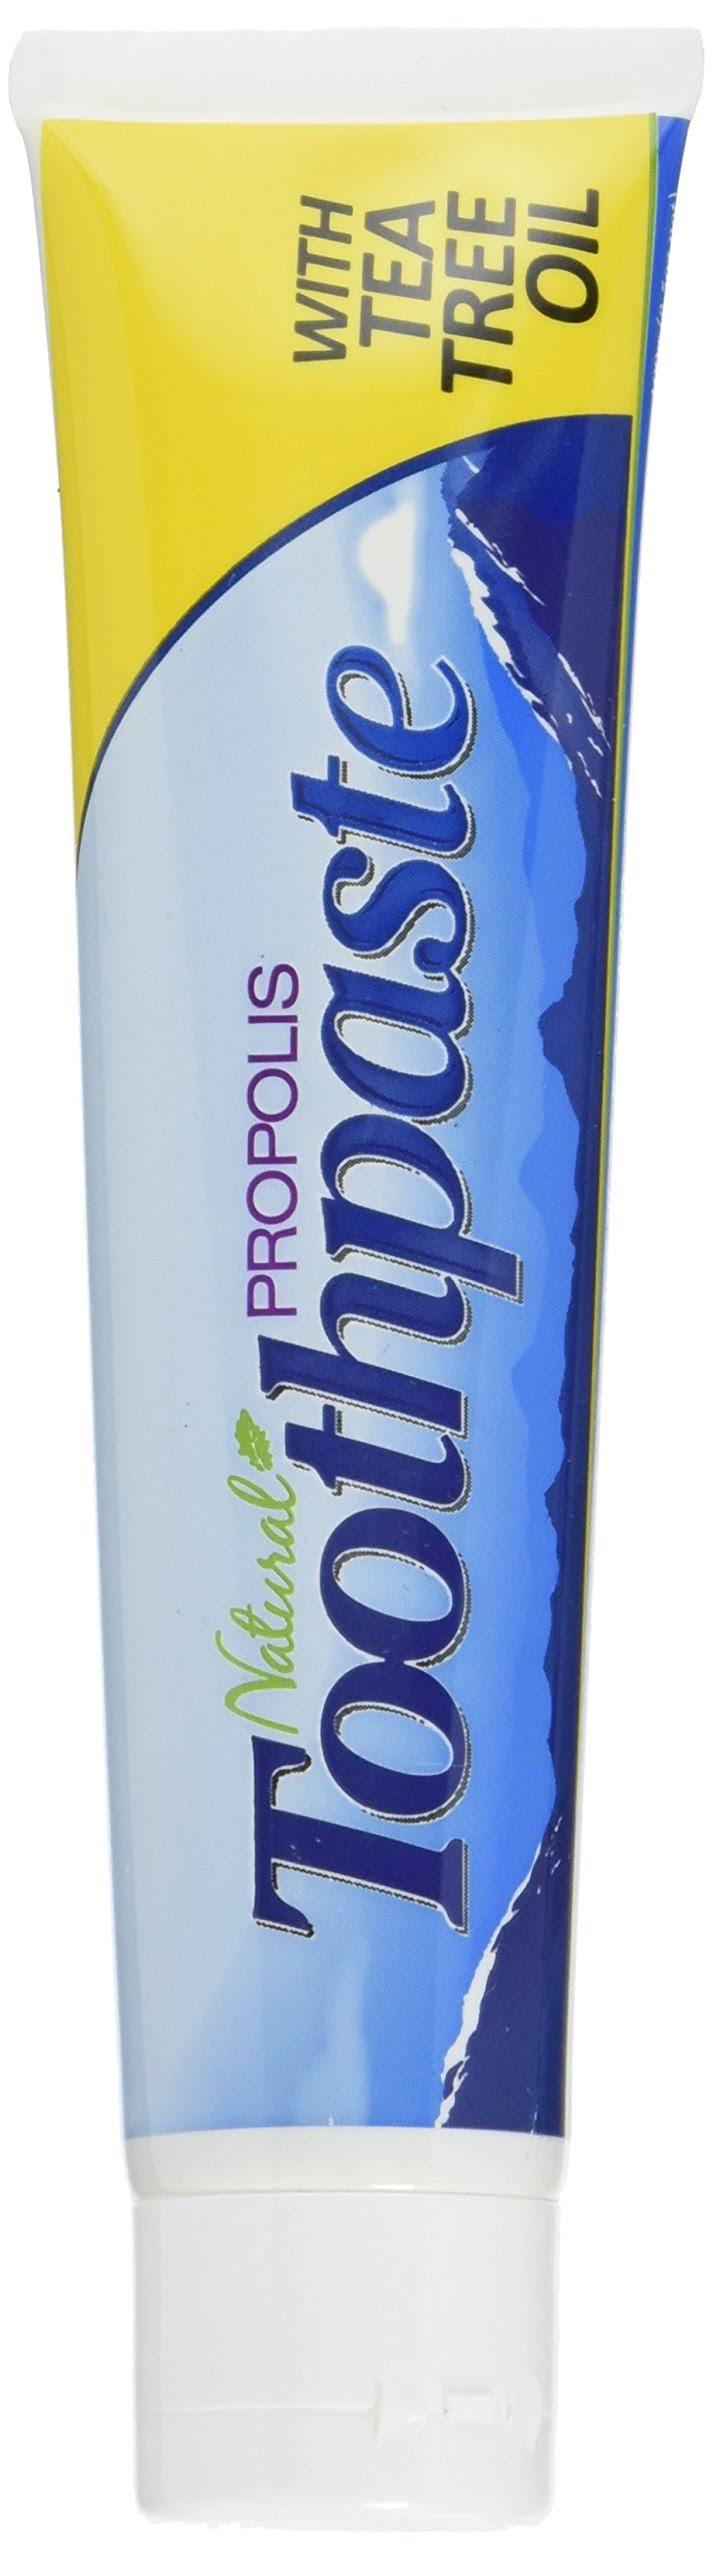 Propolis Toothpaste 3.5 Oz Pacific Resources International